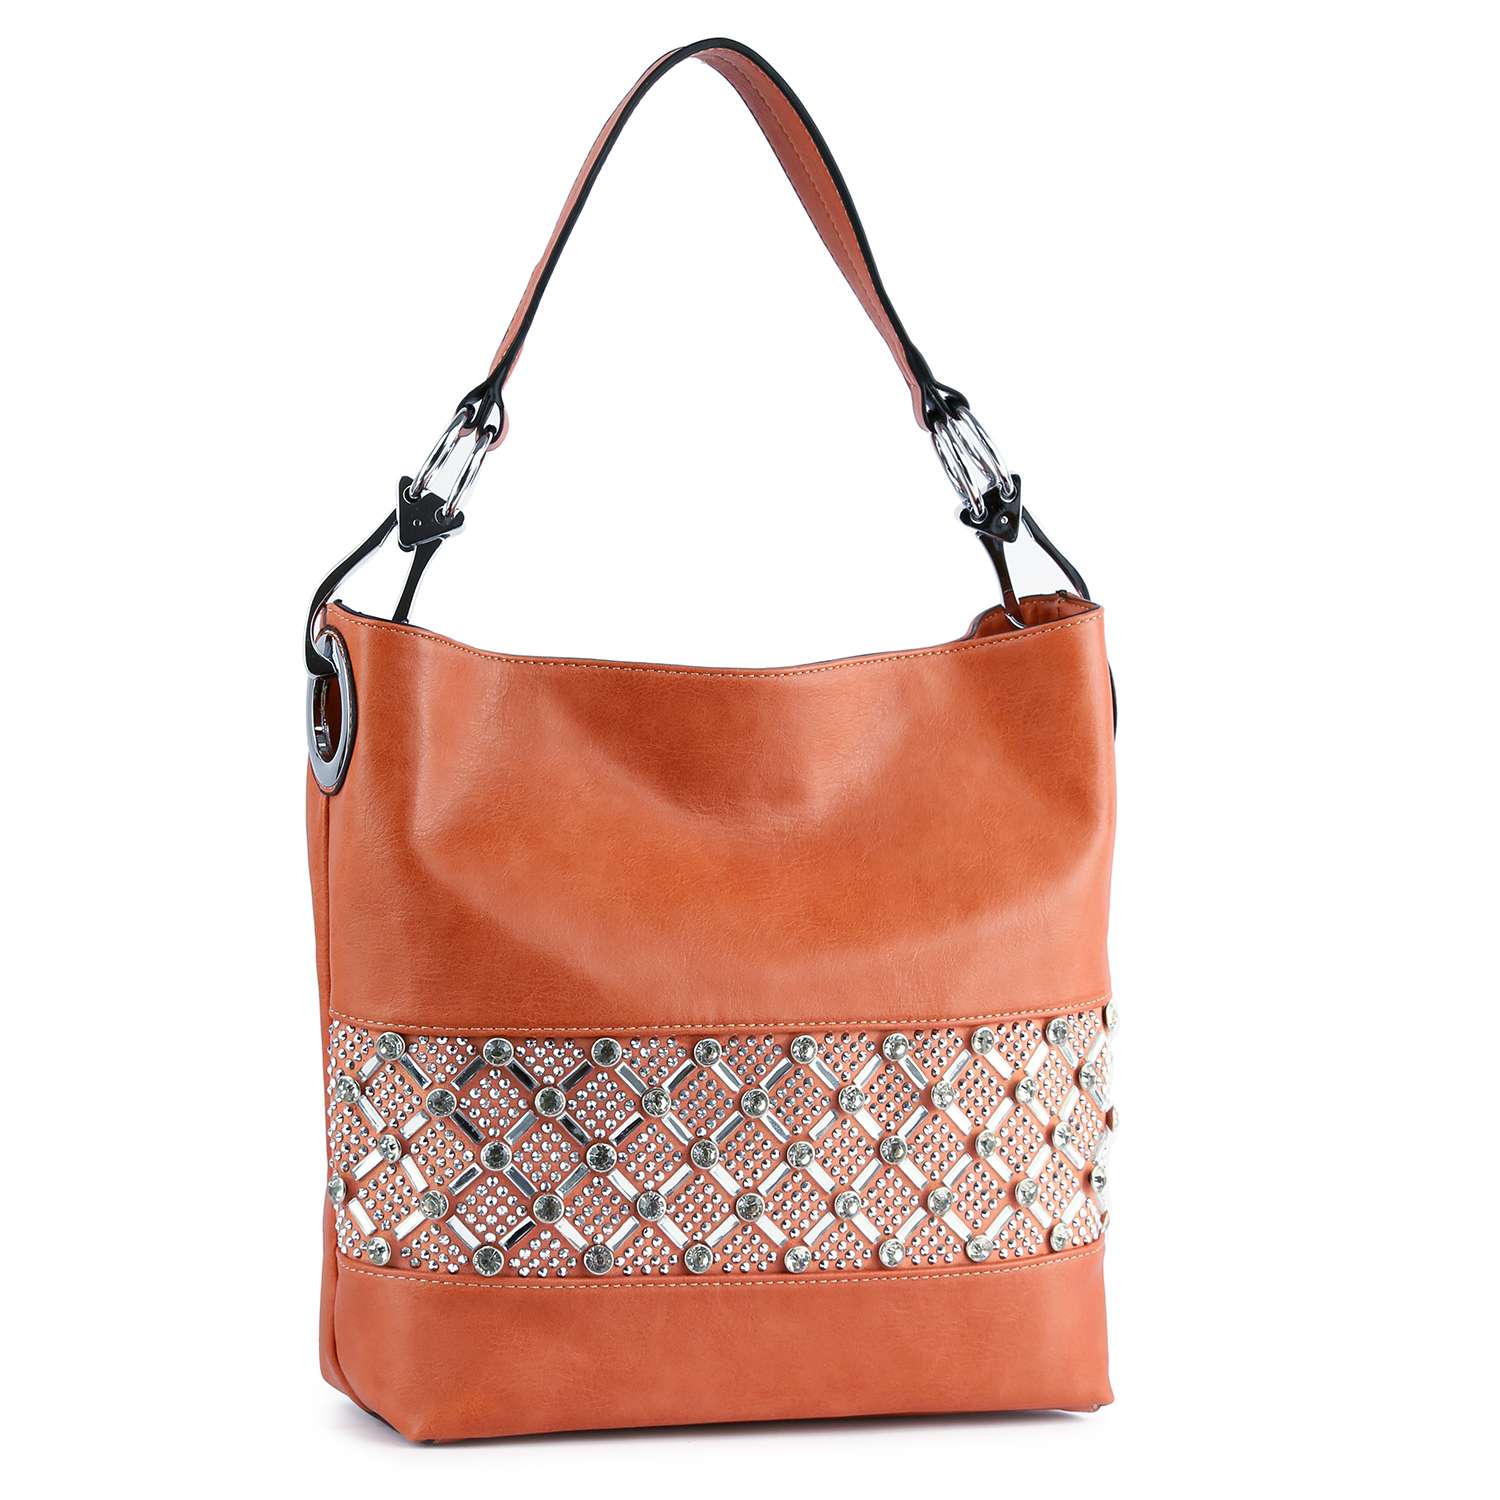 Rhinestone Bling Design Hobo Handbag - Peach